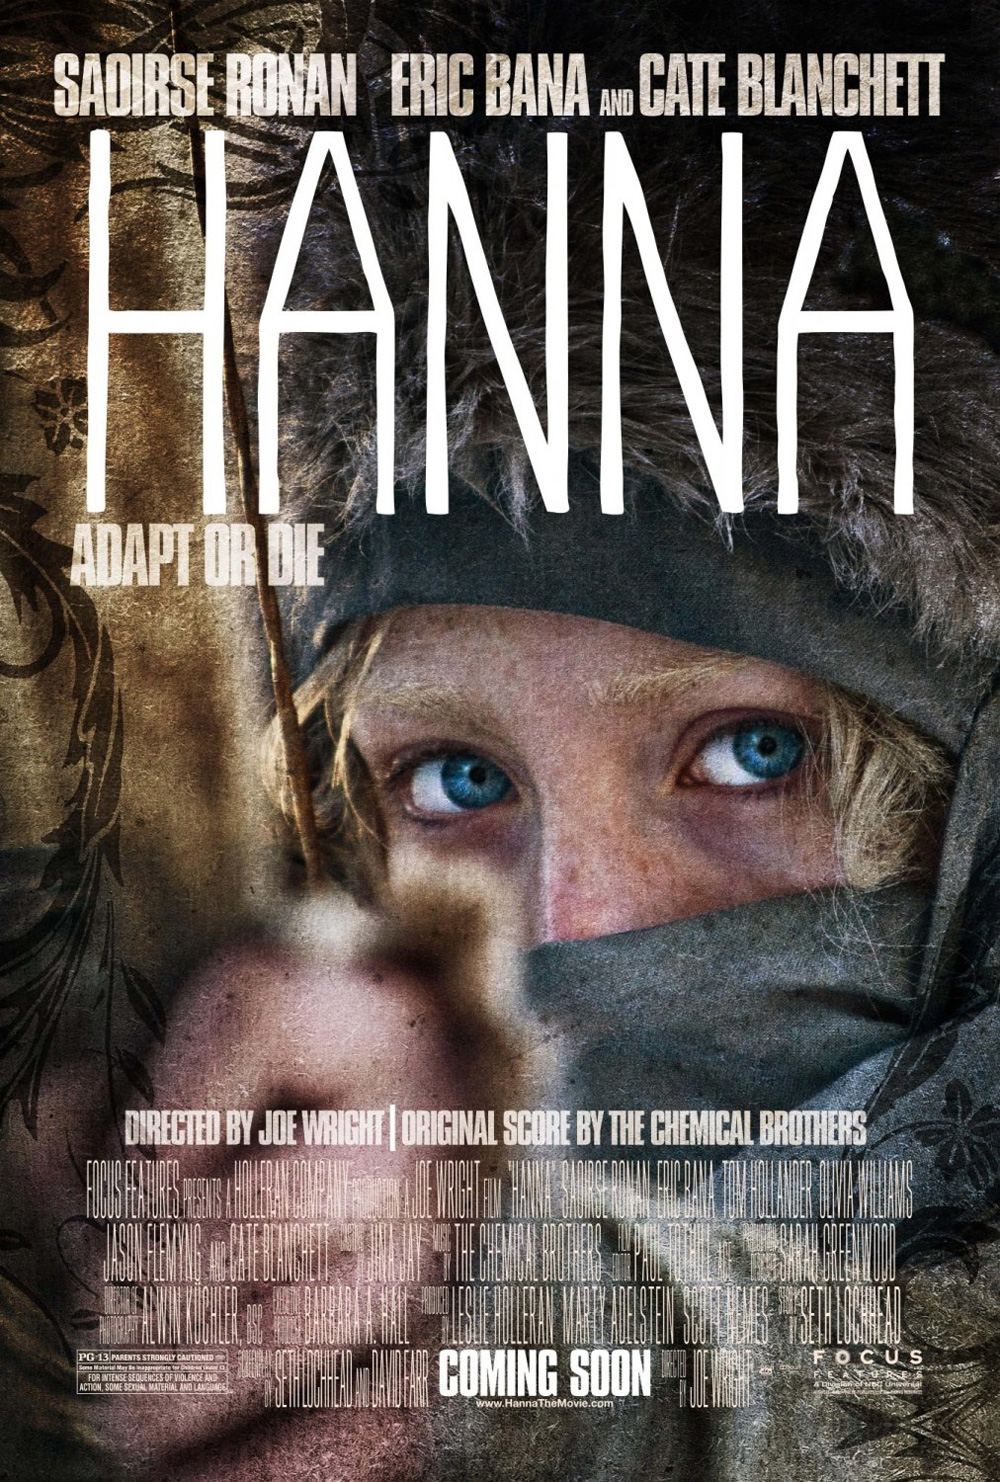 Poster Hanna